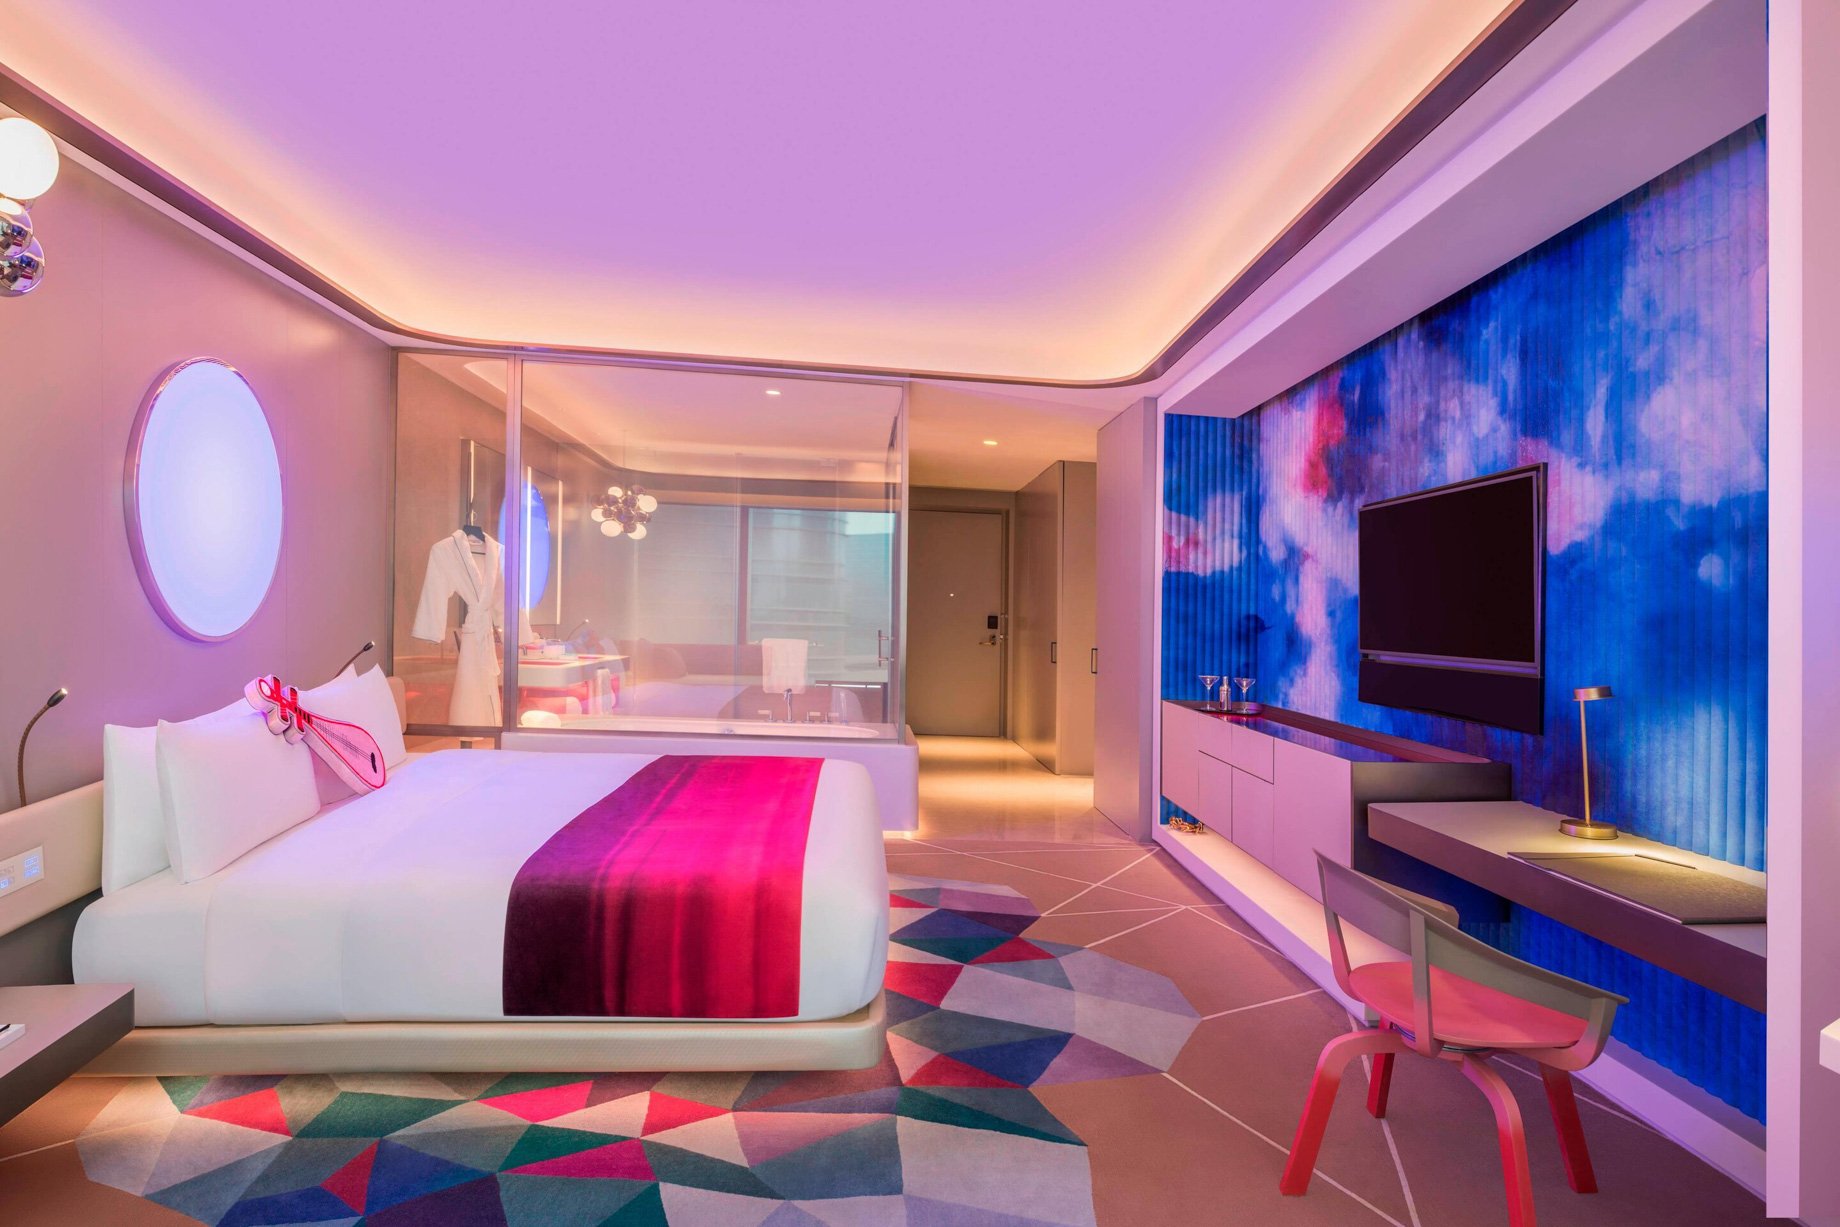 W Suzhou Hotel – Suzhou, China – Spectacular Guest Bedroom